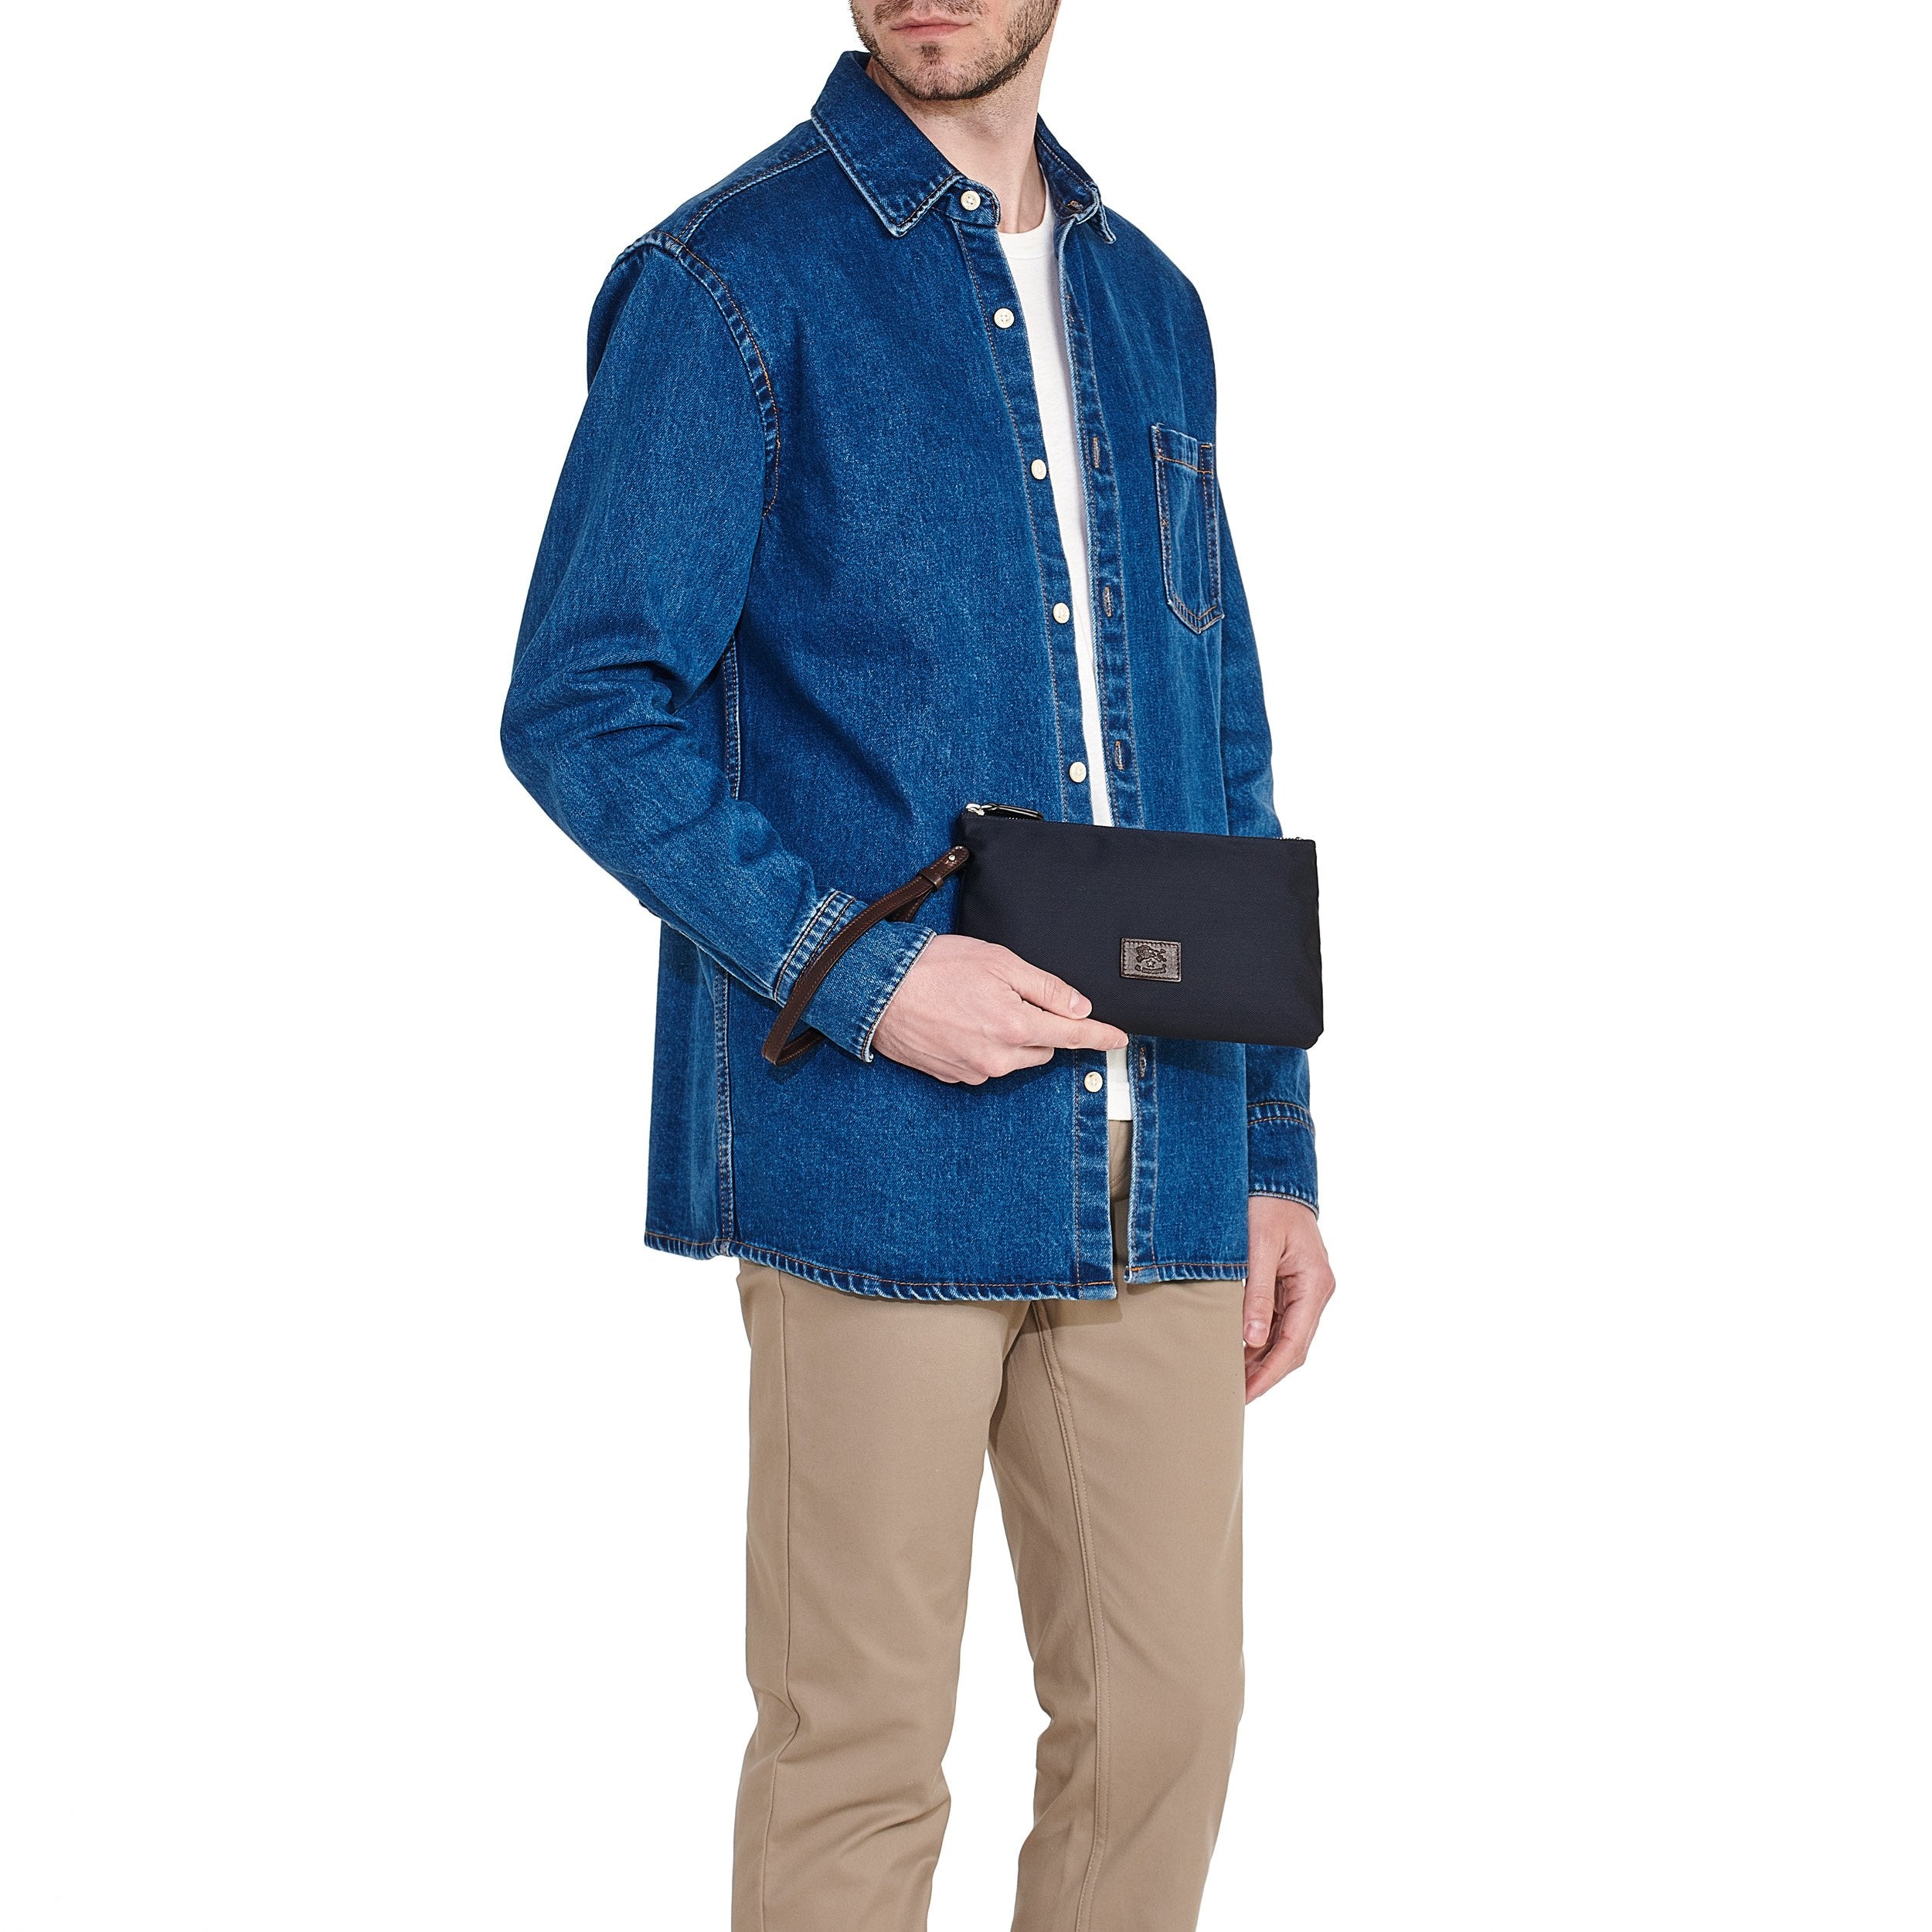 Bardi | Men's clutch bag in fabric color blue